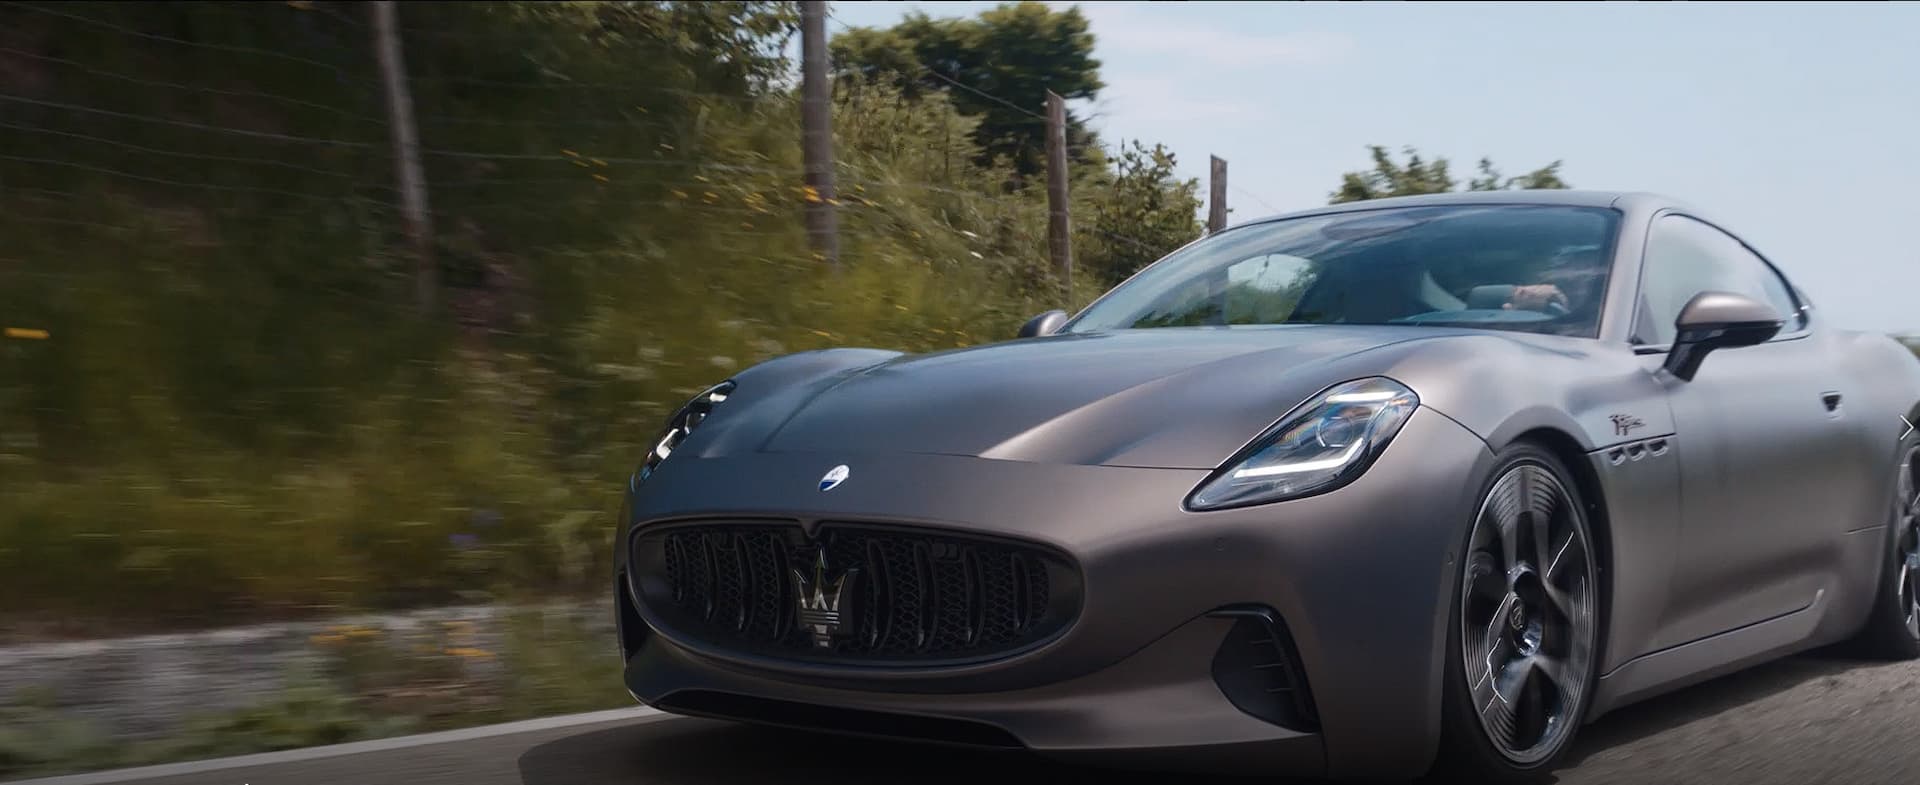 Maserati Teases New Short Film